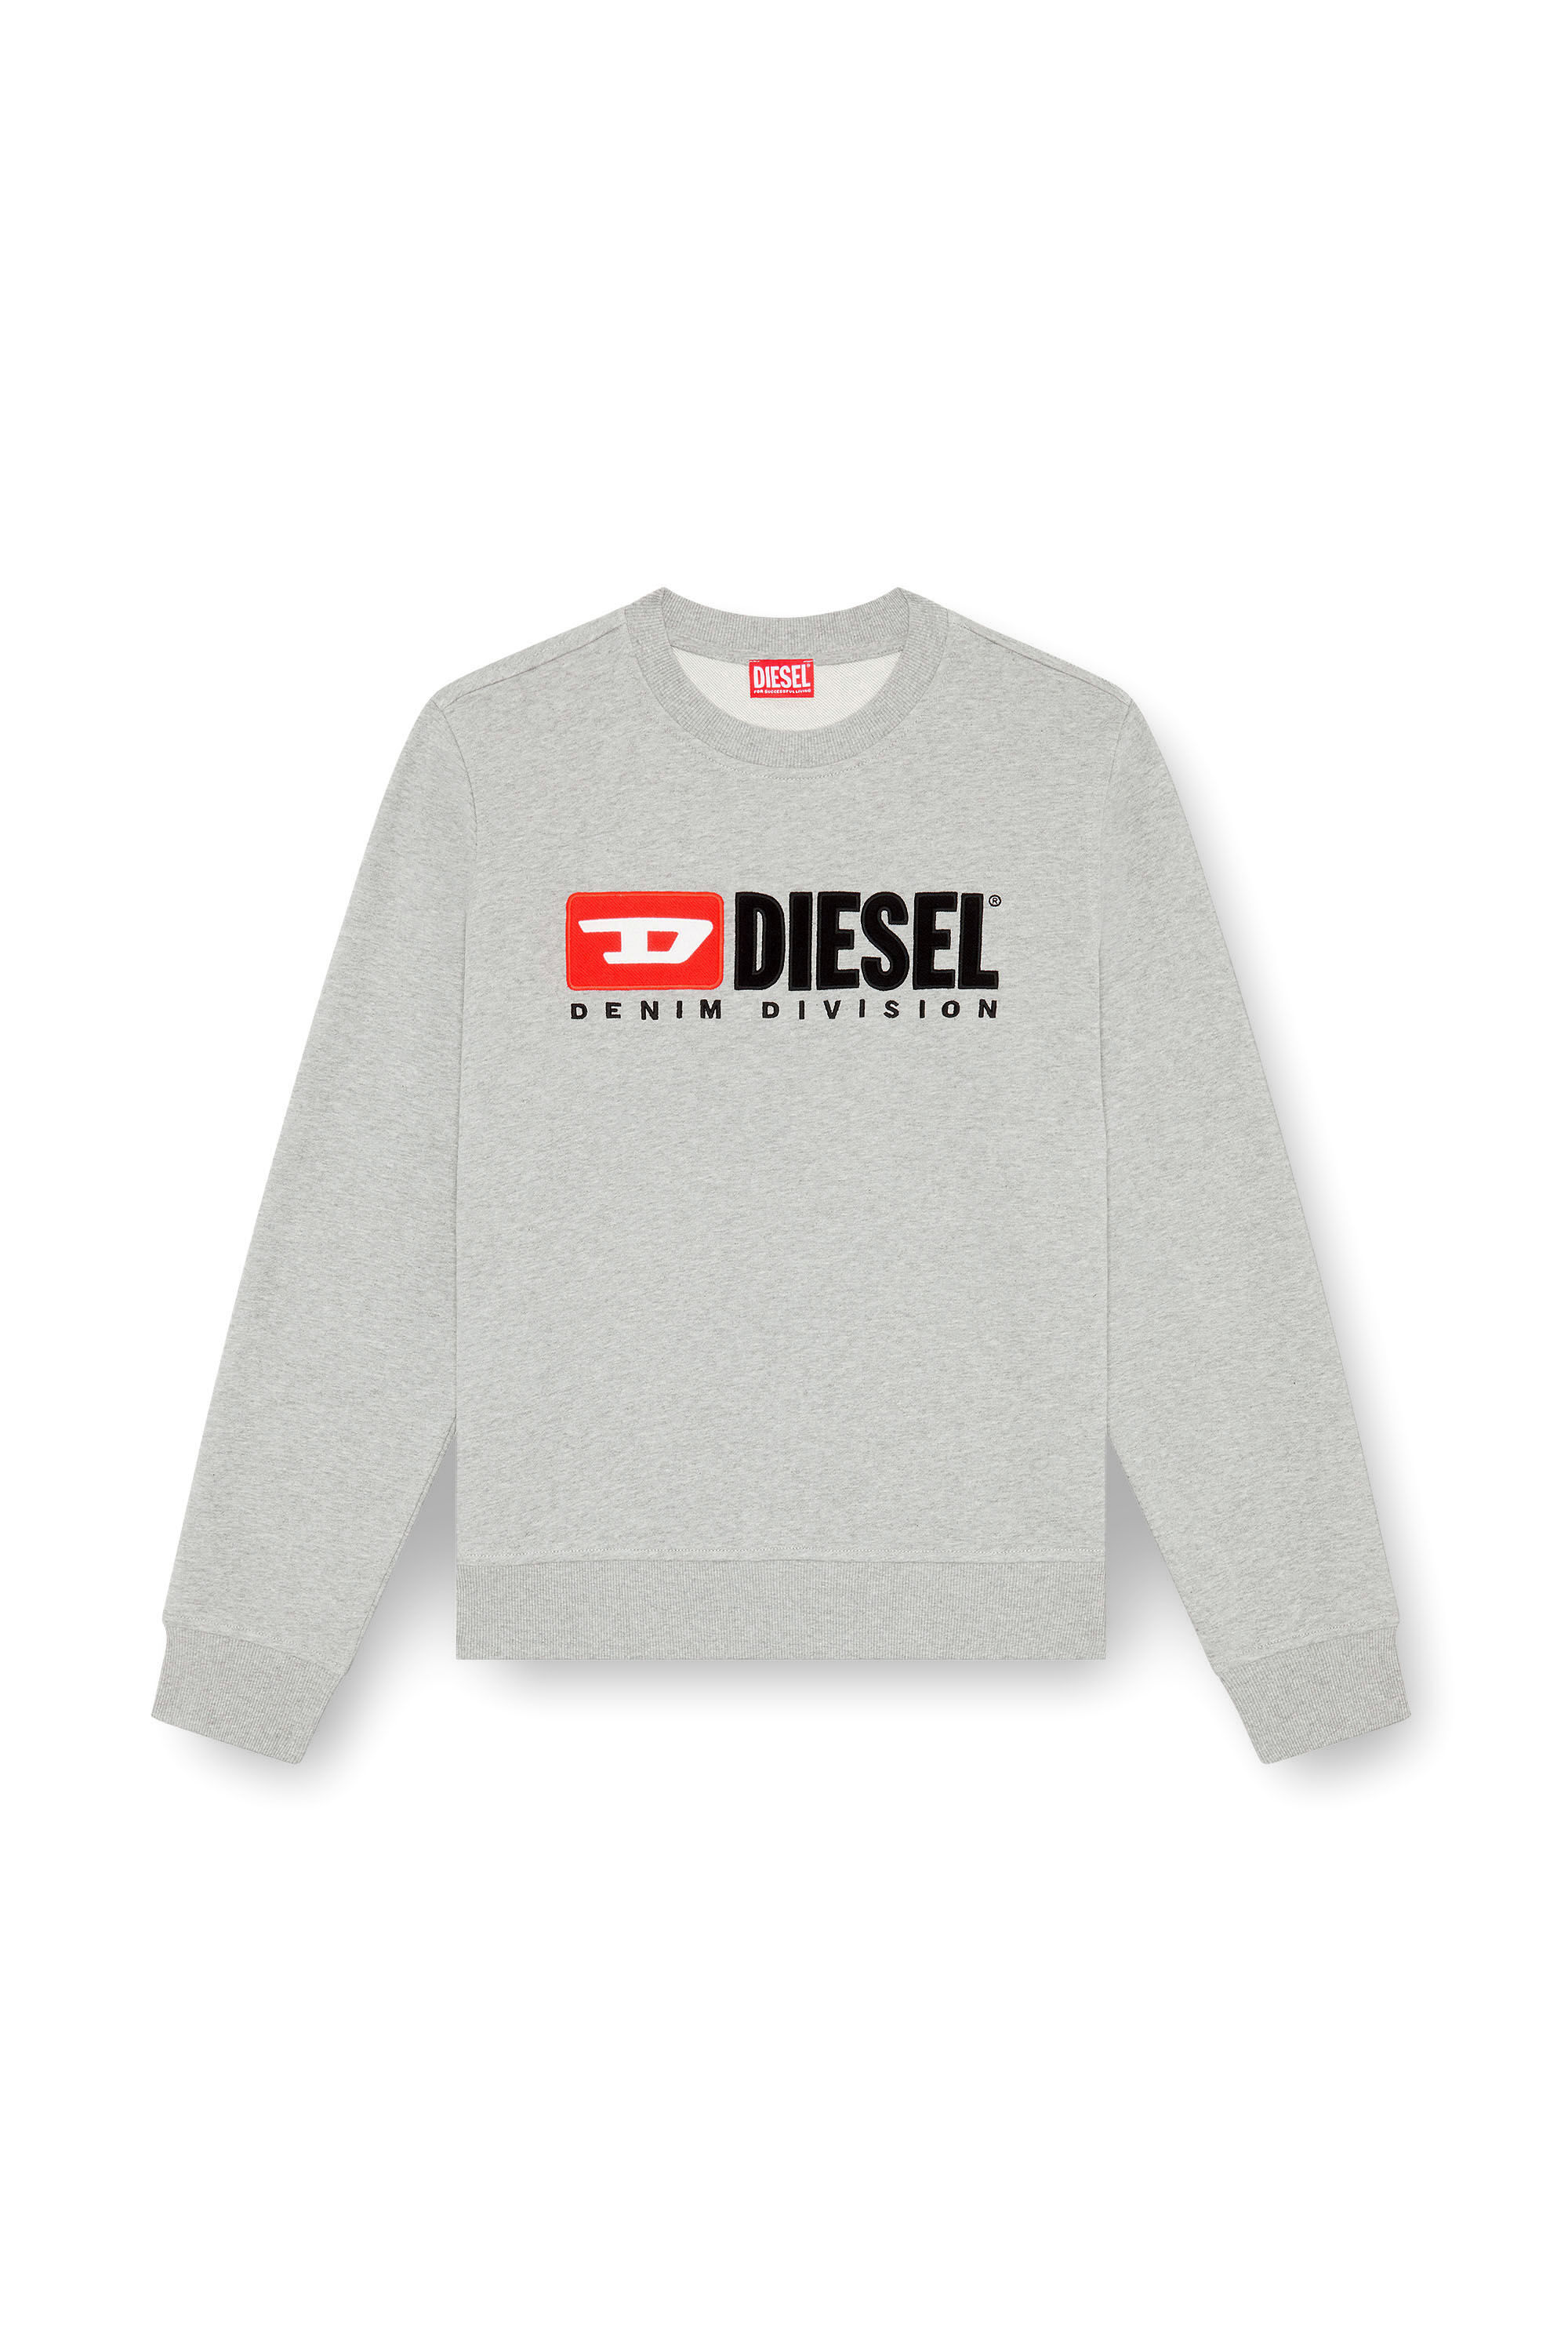 Diesel - S-BOXT-DIV, Homme Sweat-shirt avec logo Denim Division in Gris - Image 2